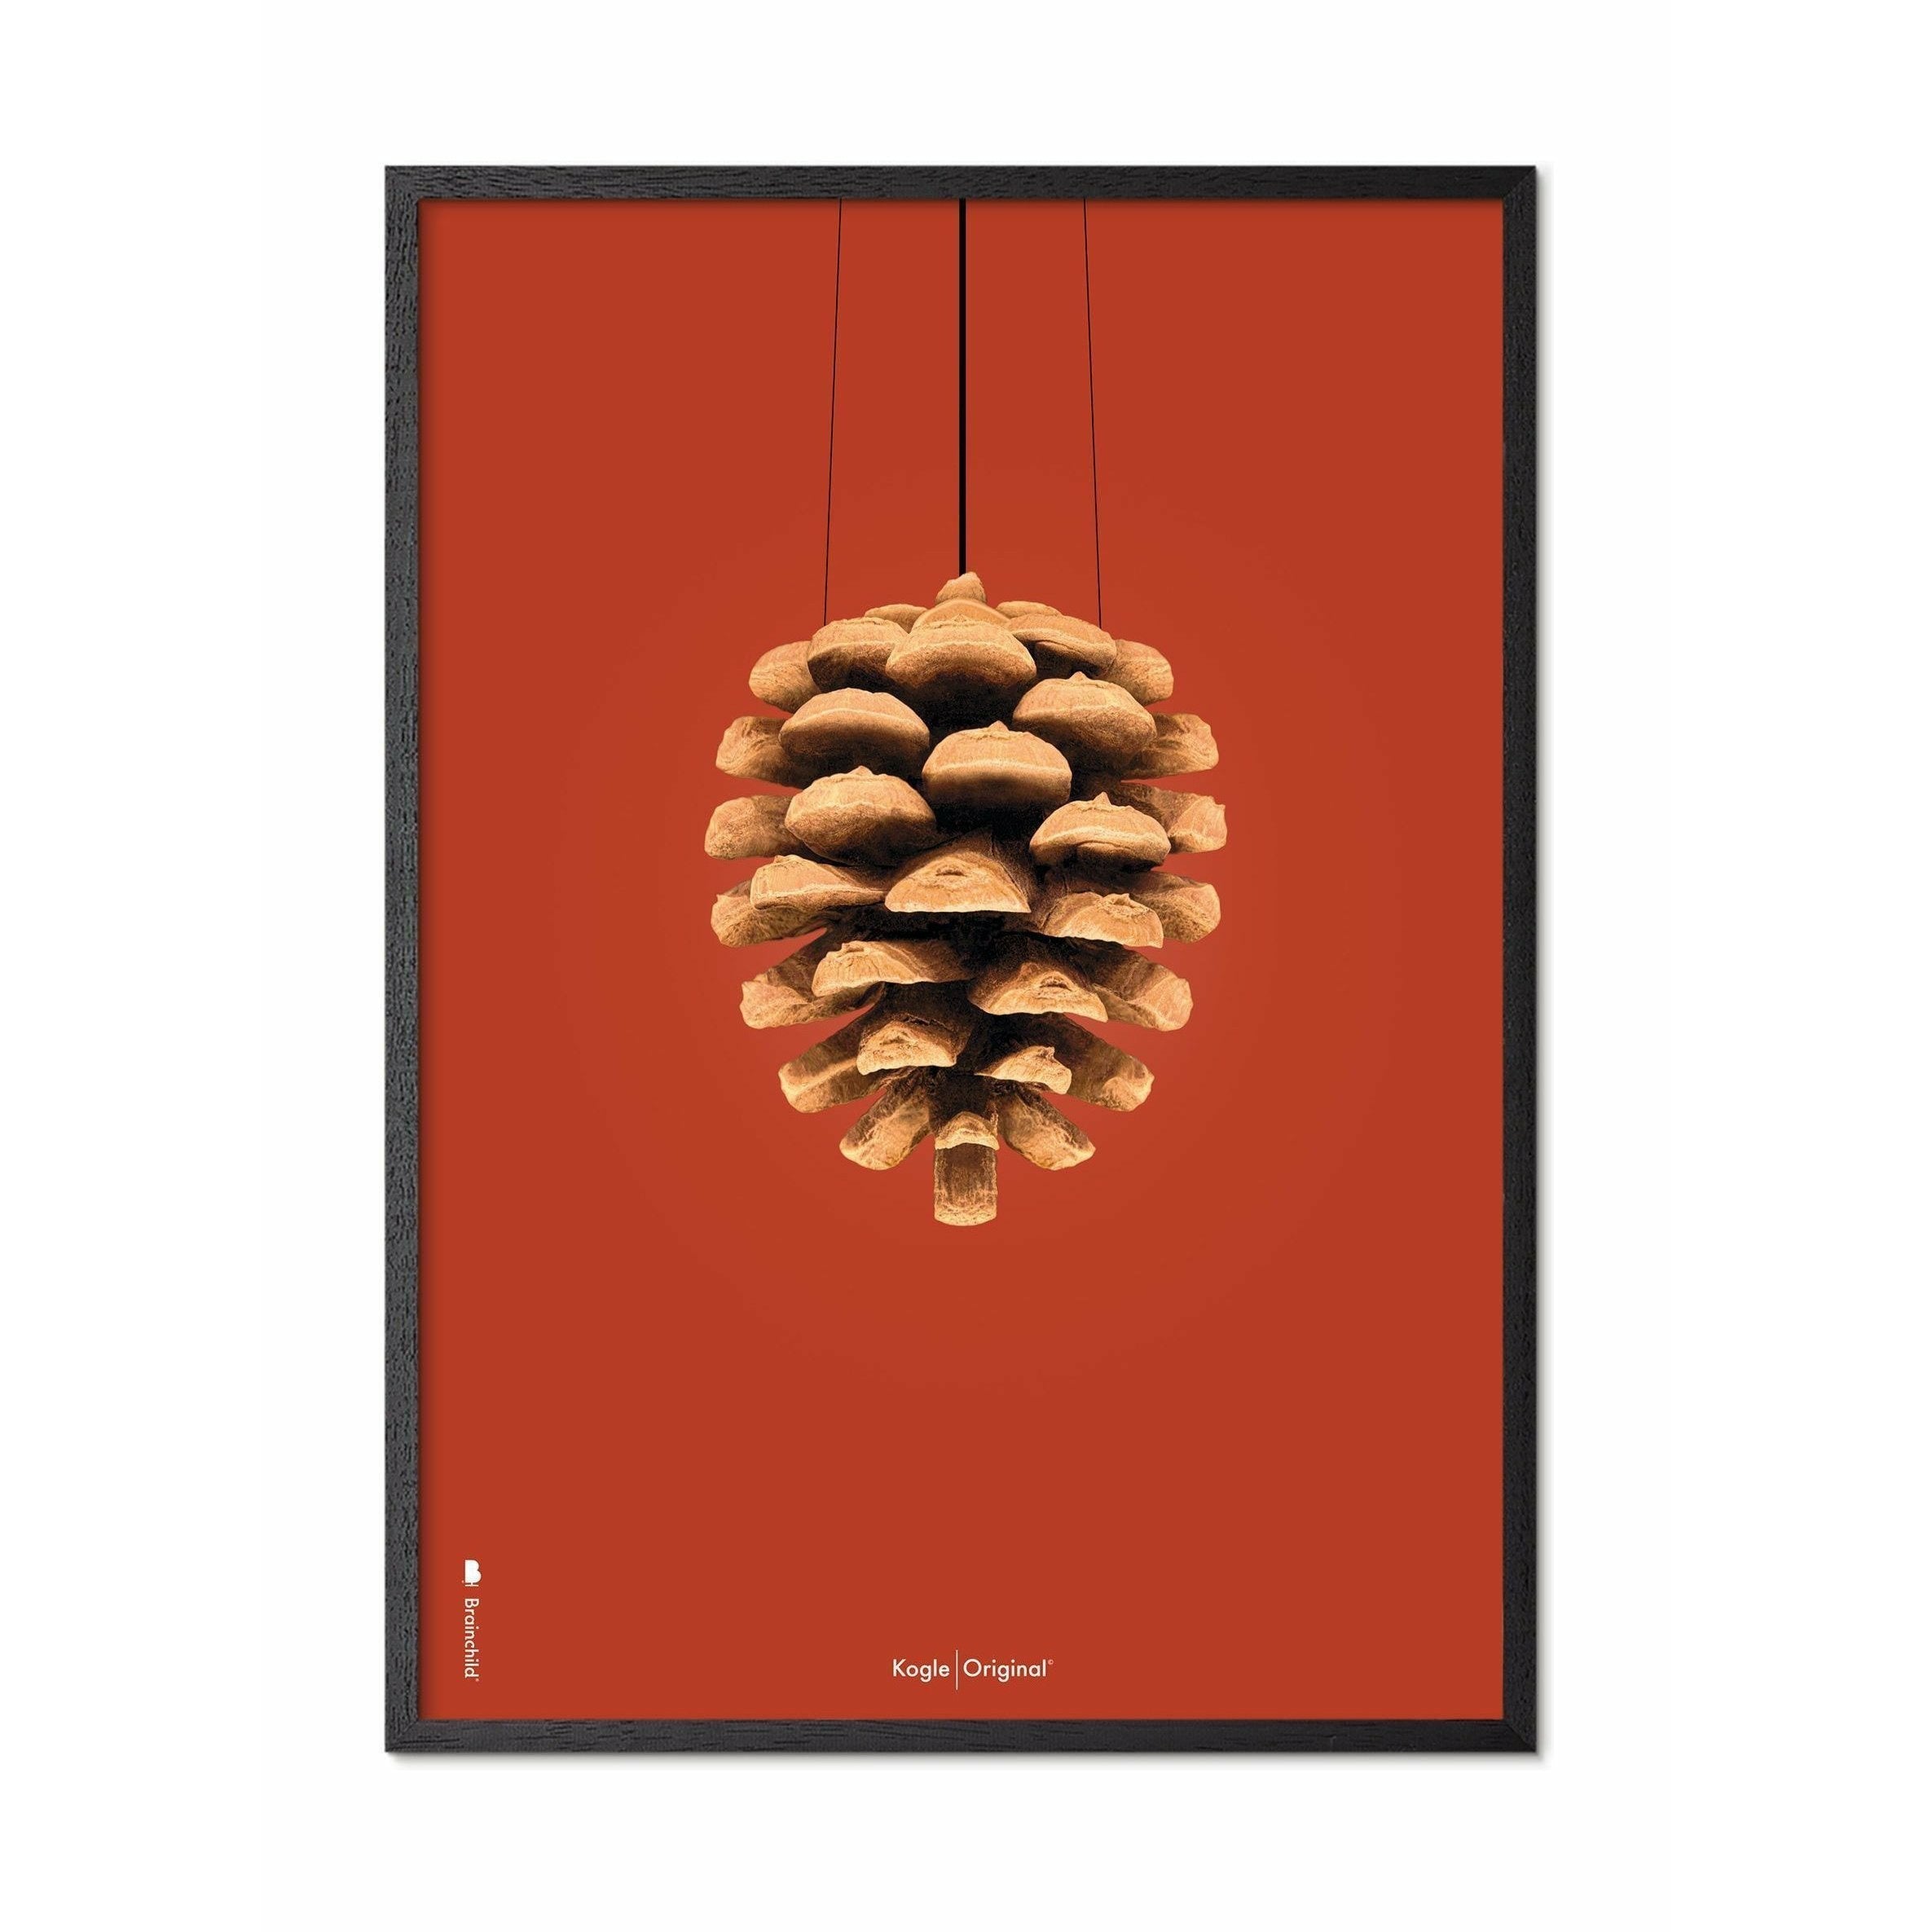 Brainchild Kogle Klassisk Plakat, Ramme I Sortmalet Træ 70X100 Cm, Rød Baggrund